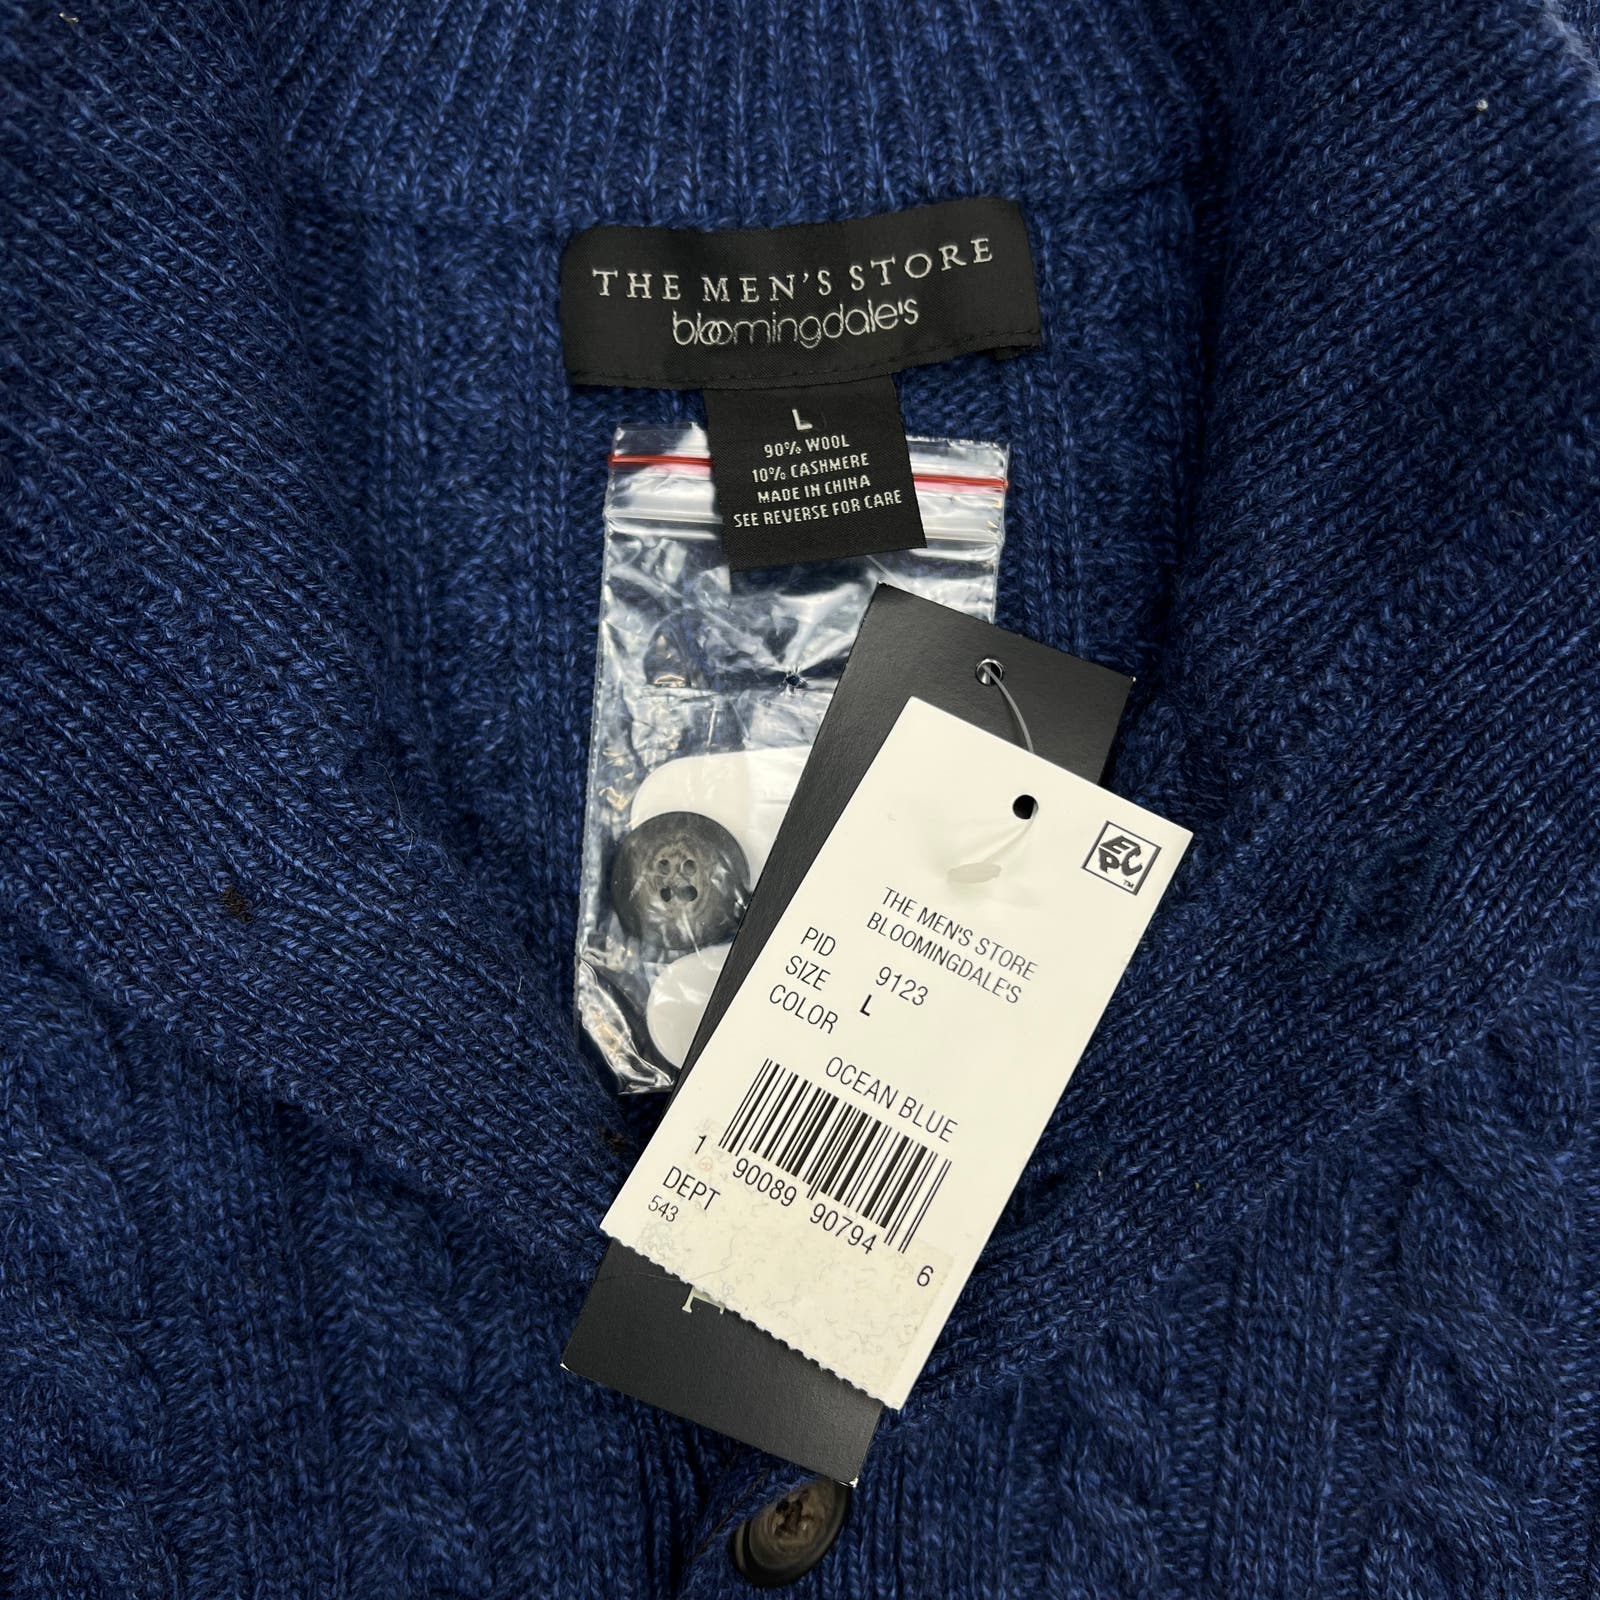 Bloomingdale's Men Blue Sweatshirt US L Wool Cashmere Pullover